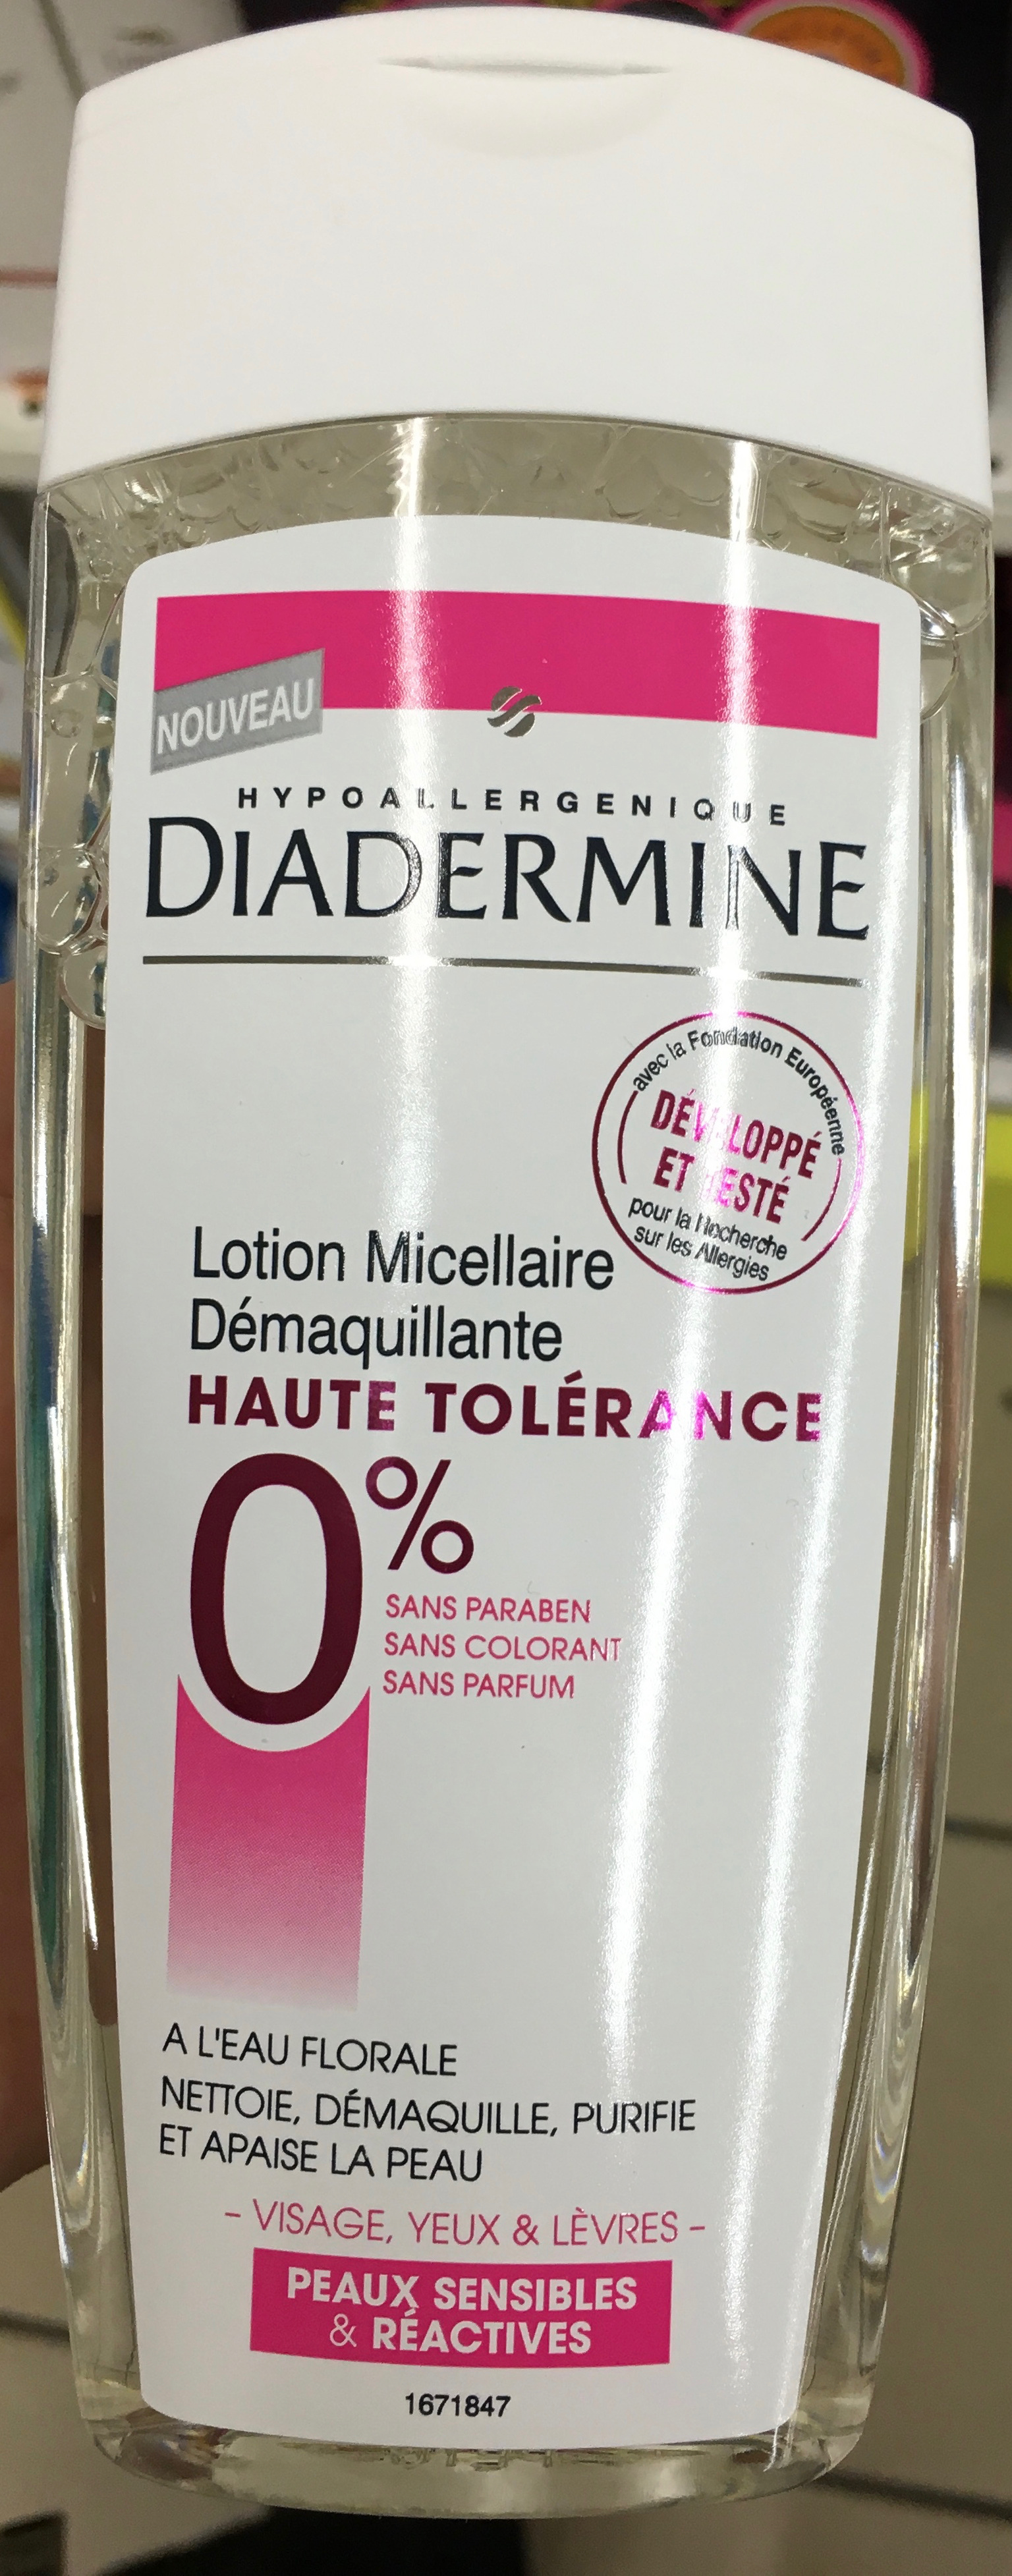 Lotion micellaire démaquillante Haute Tolérance - Product - fr